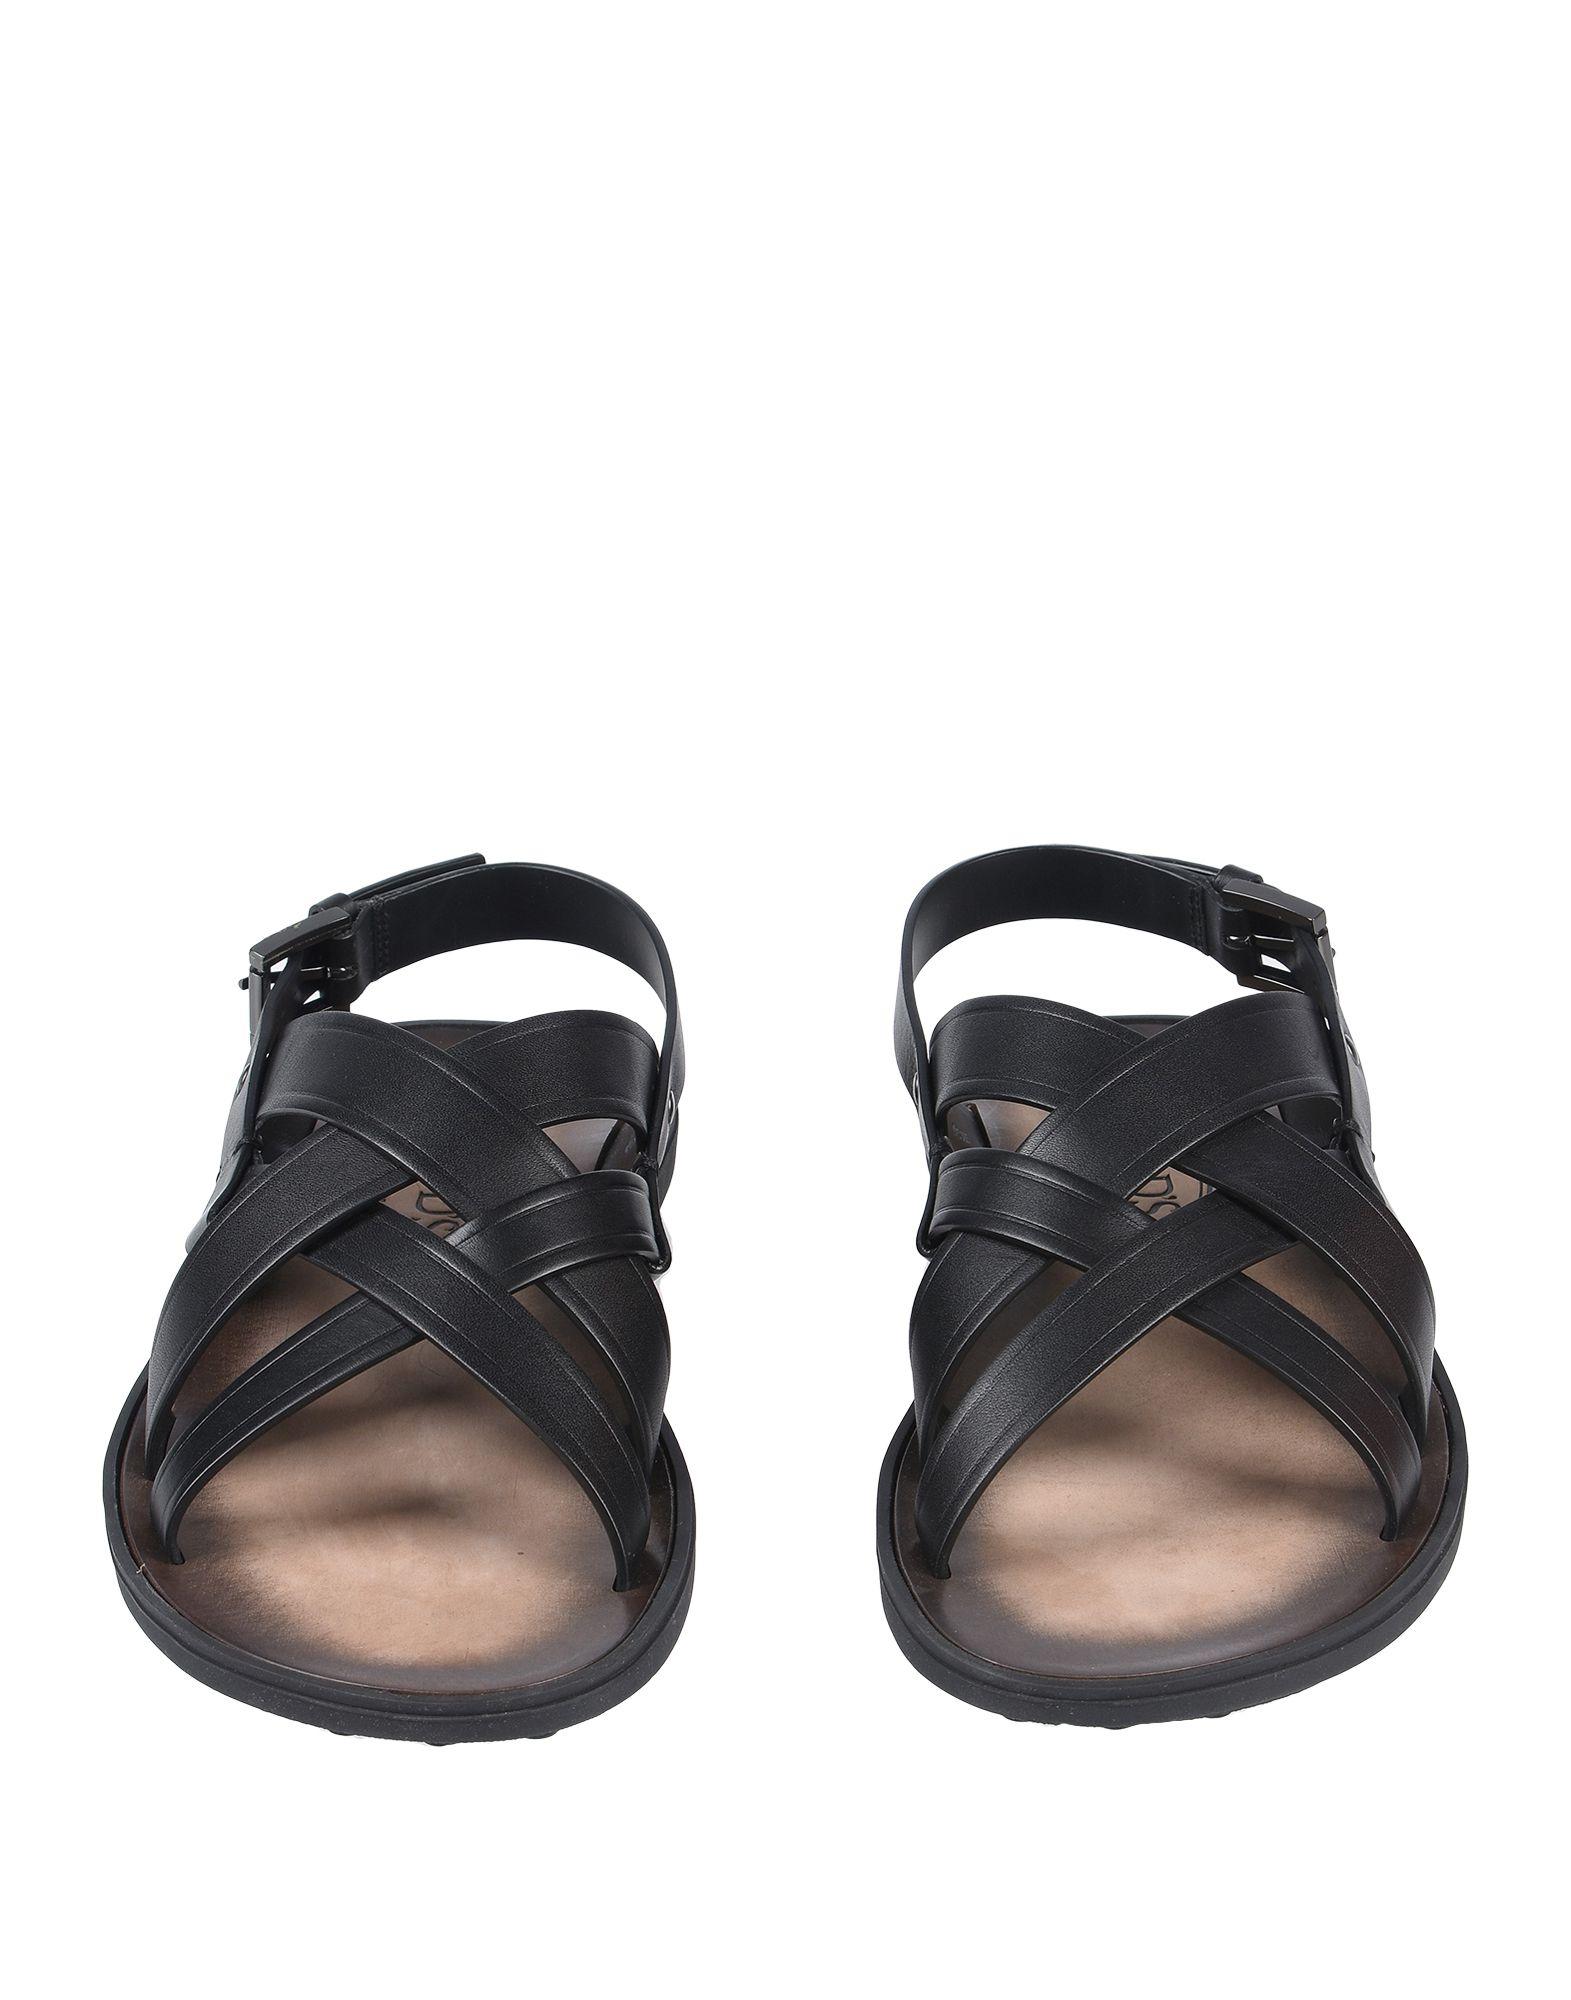 Tod's Sandals in Black for Men - Lyst